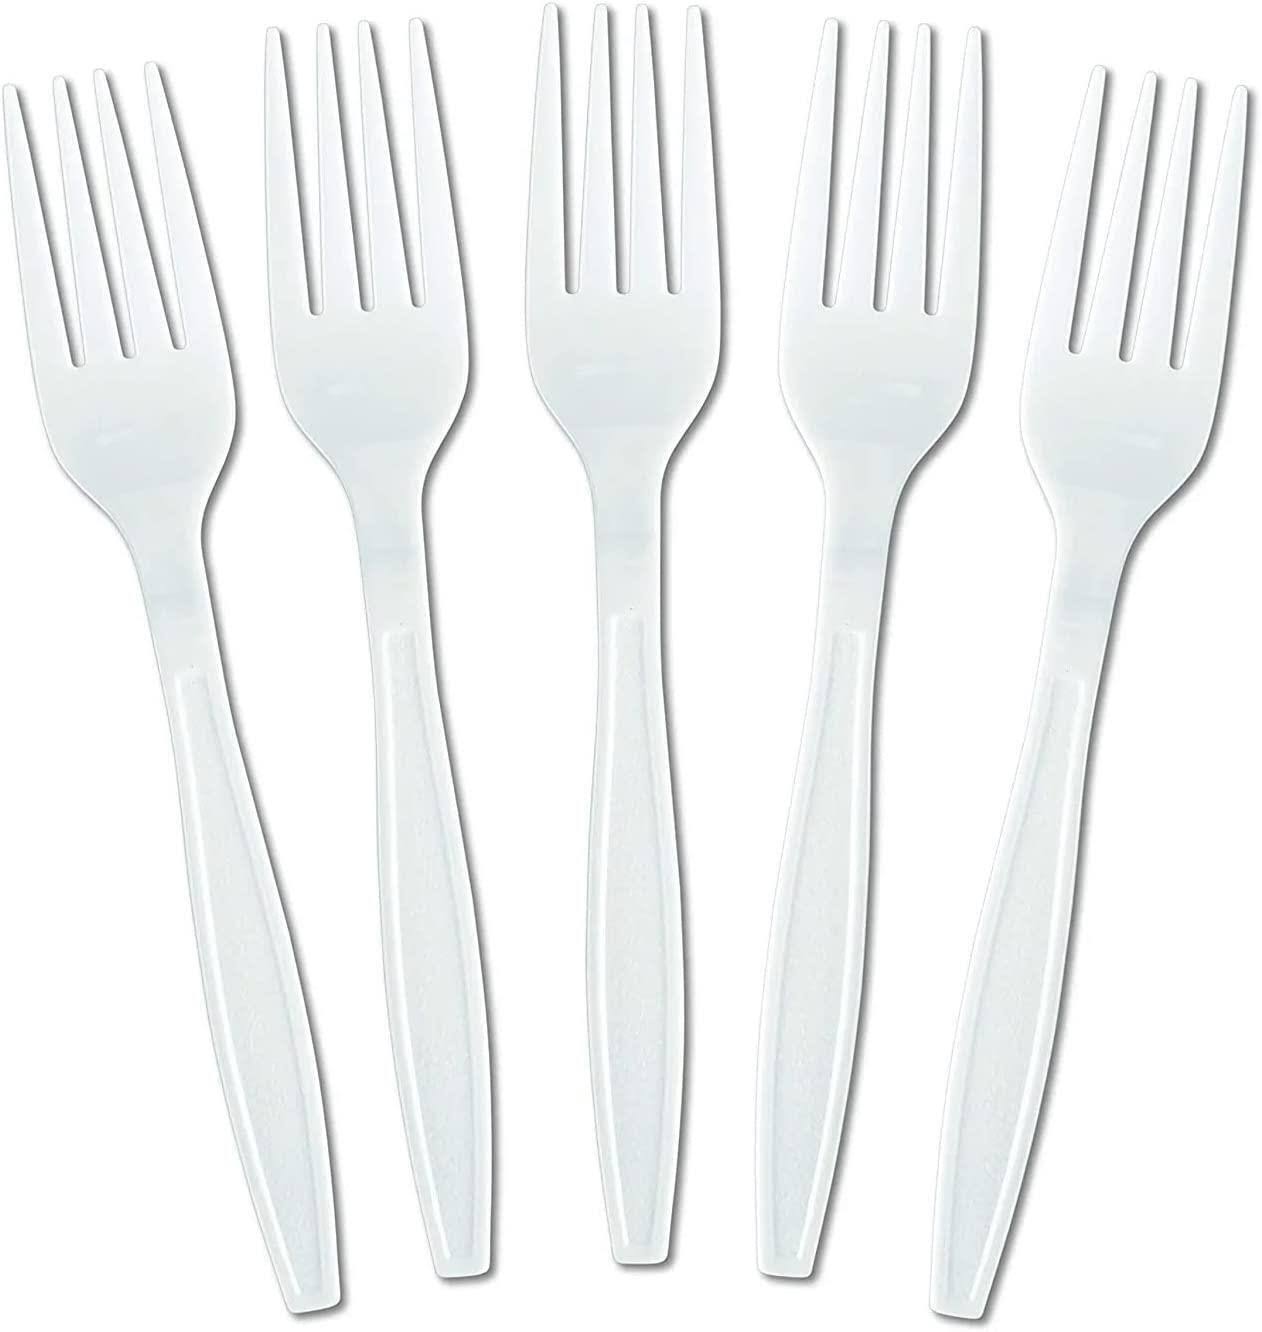 100pcs Heavy Duty Plastic Forks